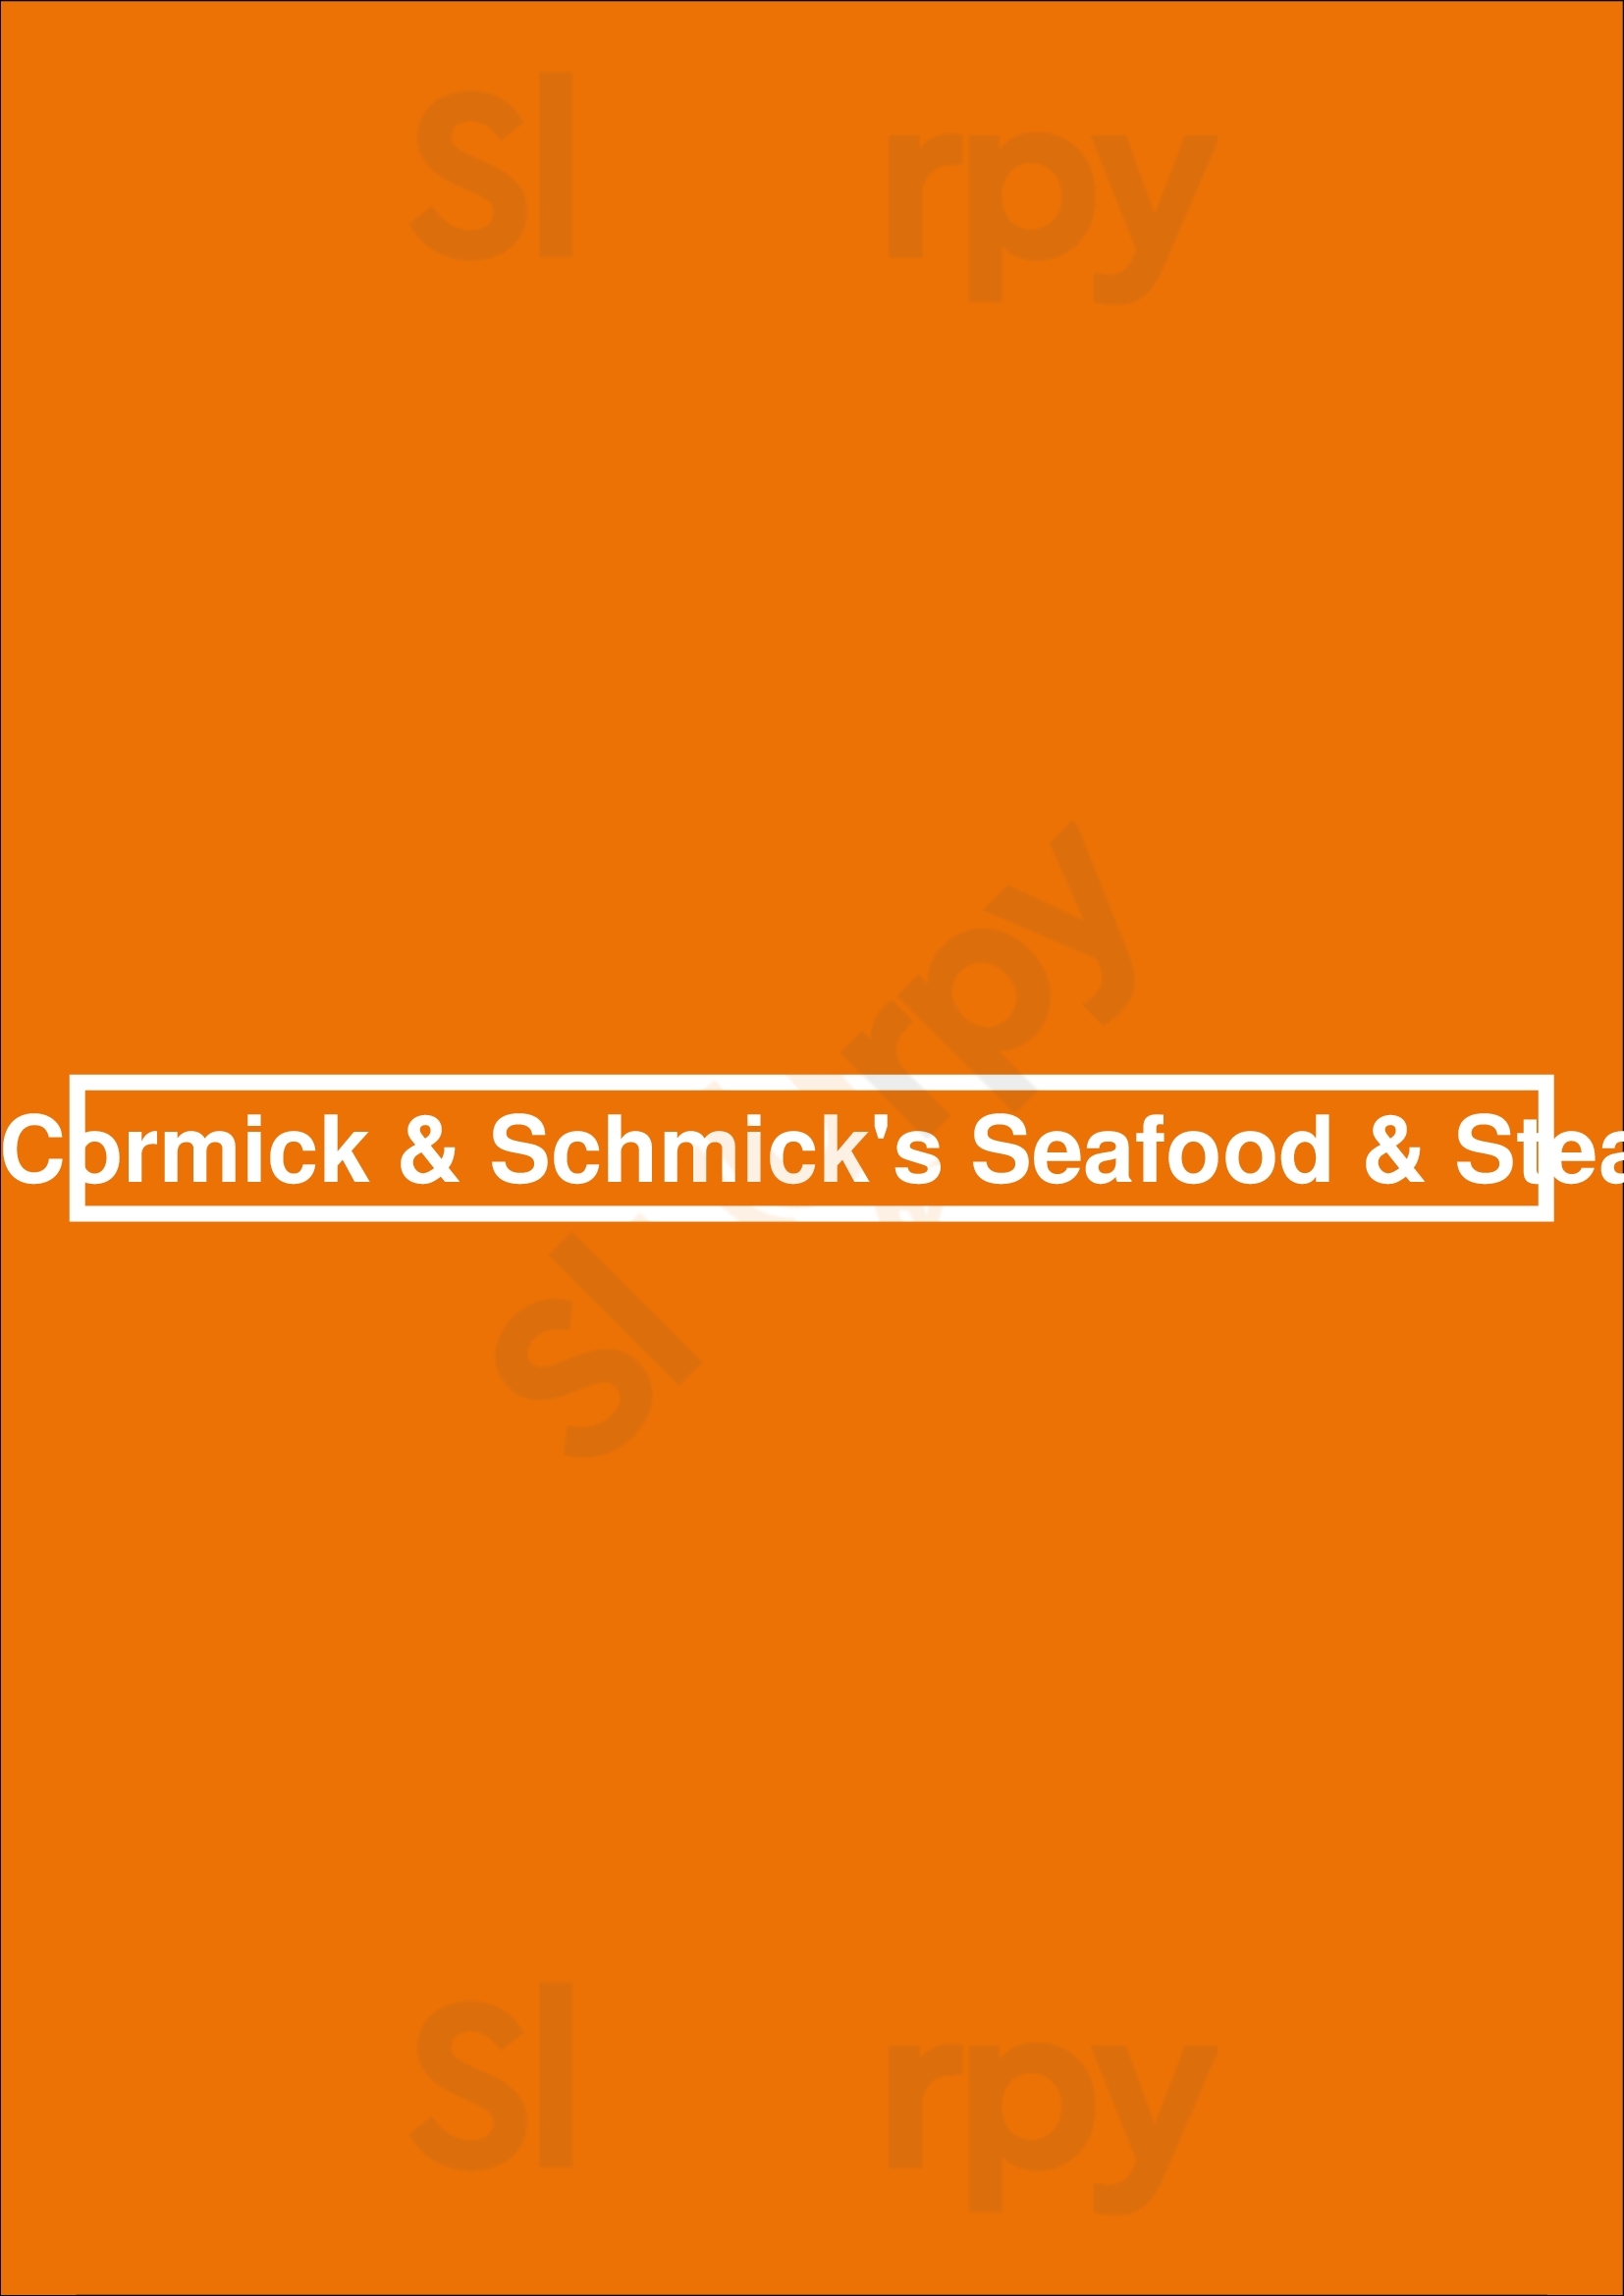 Mccormick & Schmick's Seafood & Steaks Kansas City Menu - 1